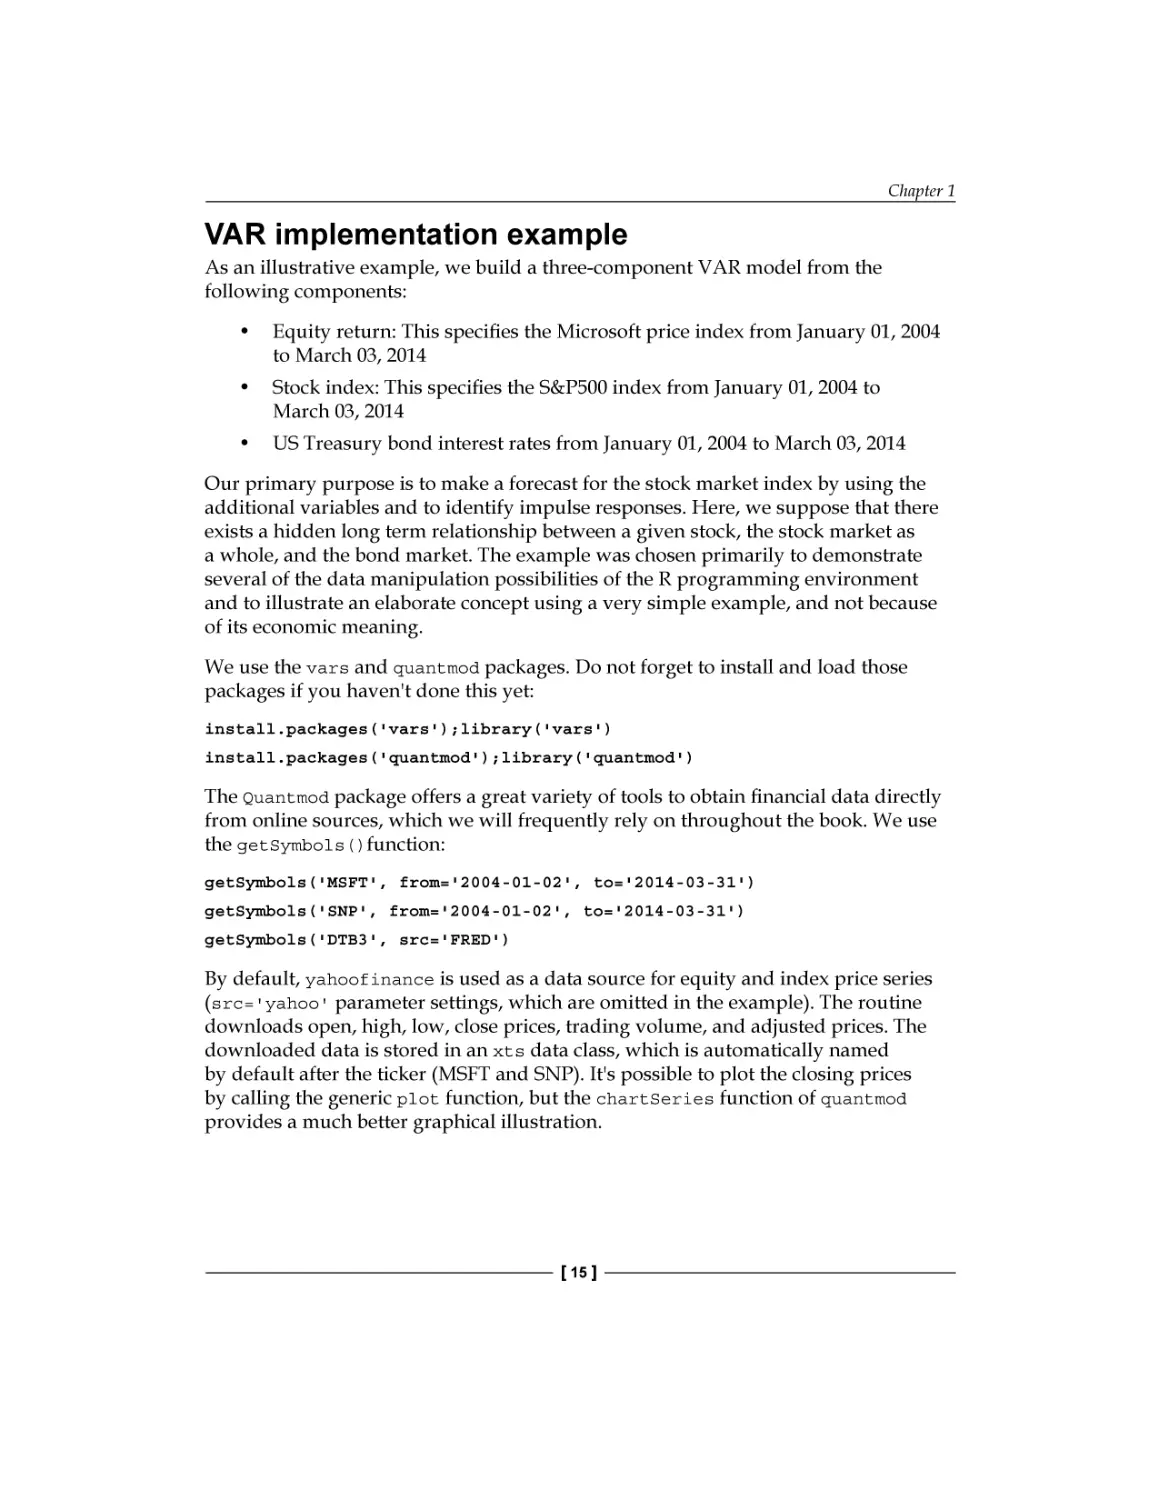 VAR implementation example